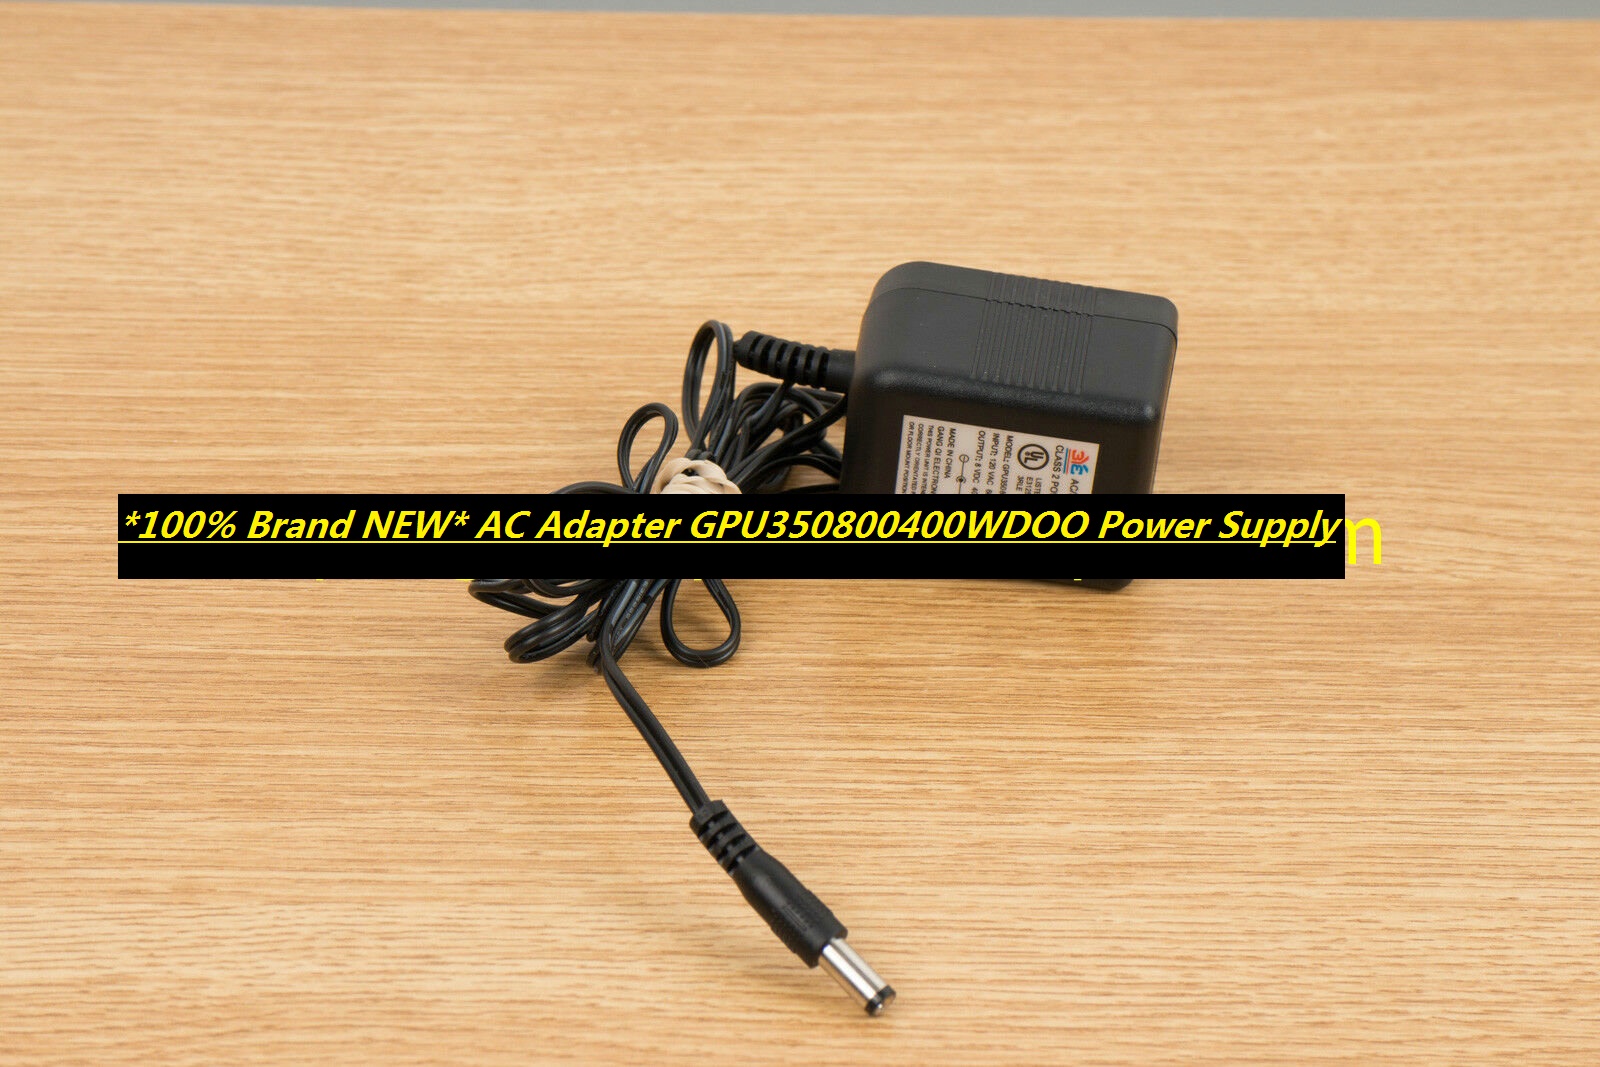 *100% Brand NEW* AC Adapter GPU350800400WDOO Power Supply - Click Image to Close